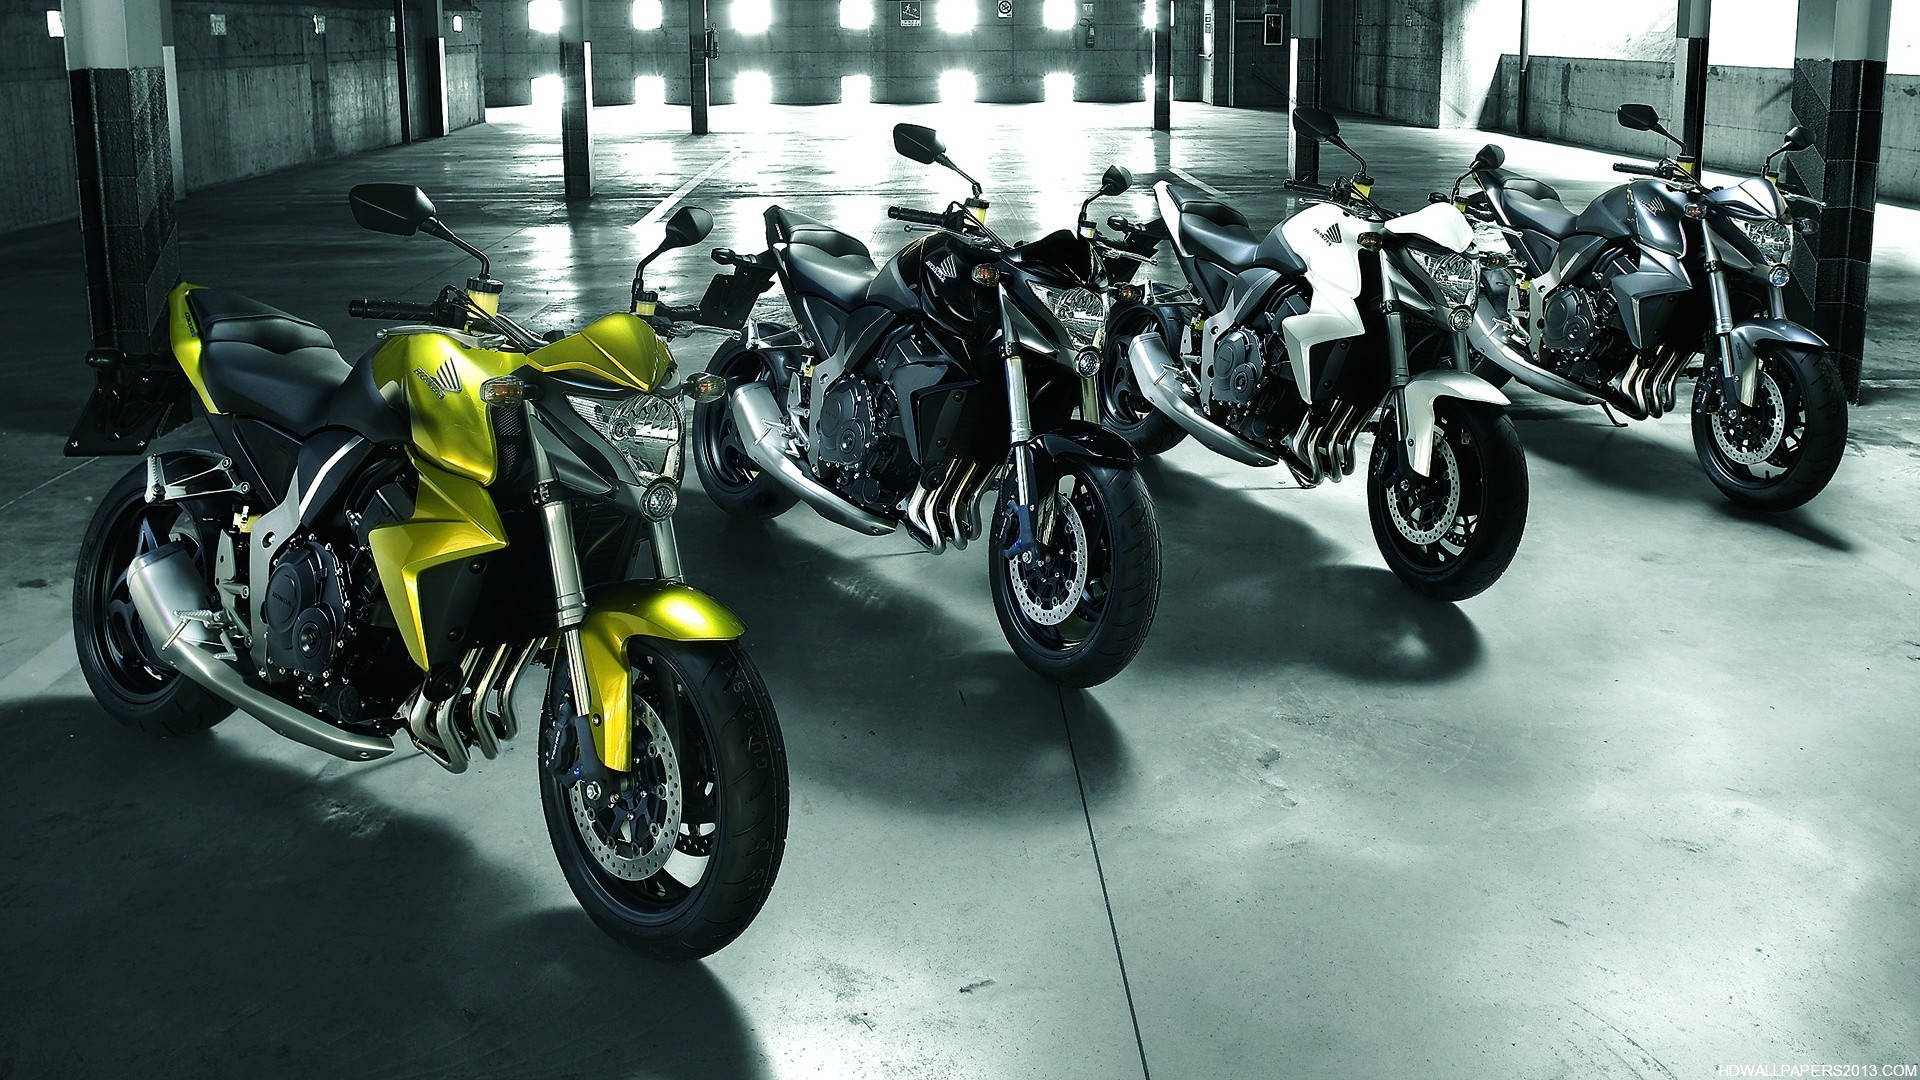 Ungrupo De Motocicletas Estacionadas En Un Garaje Fondo de pantalla